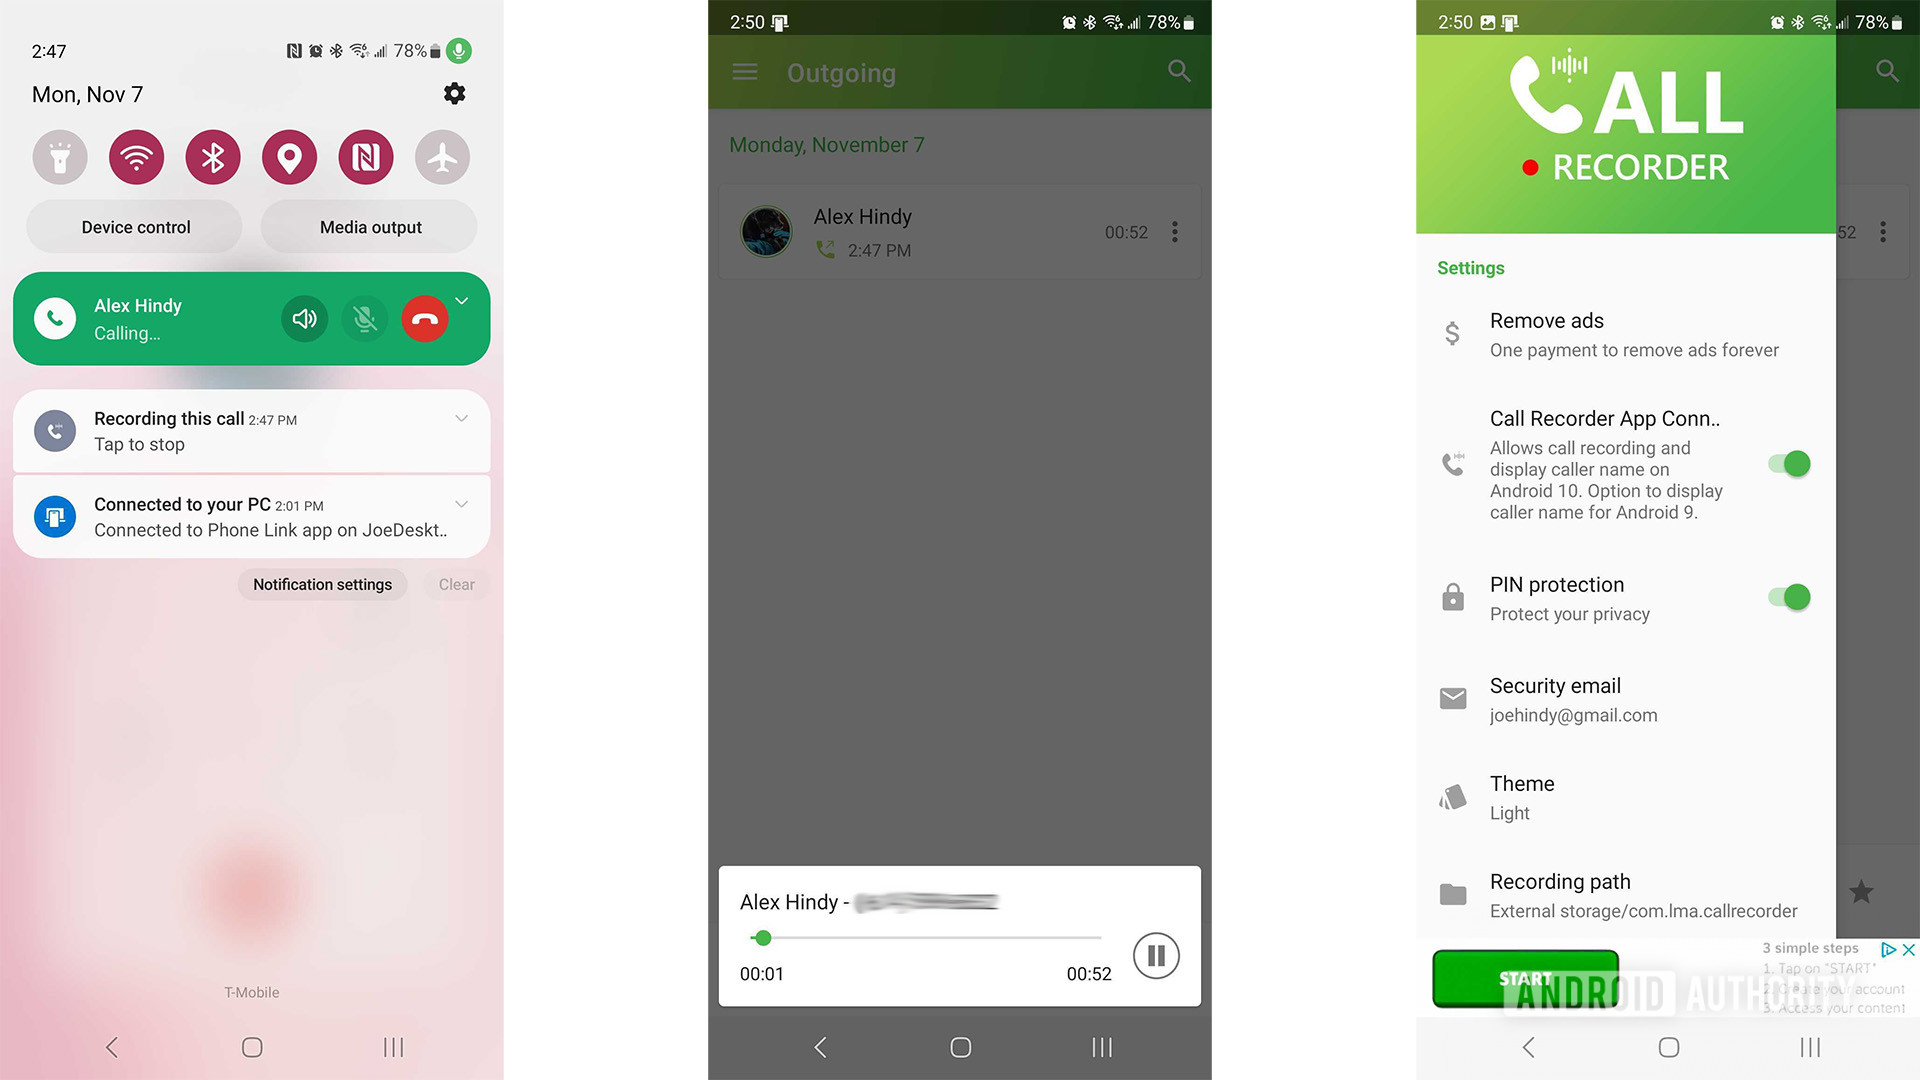 Call Recorder Lucky Mobile Apps screenshot 2022